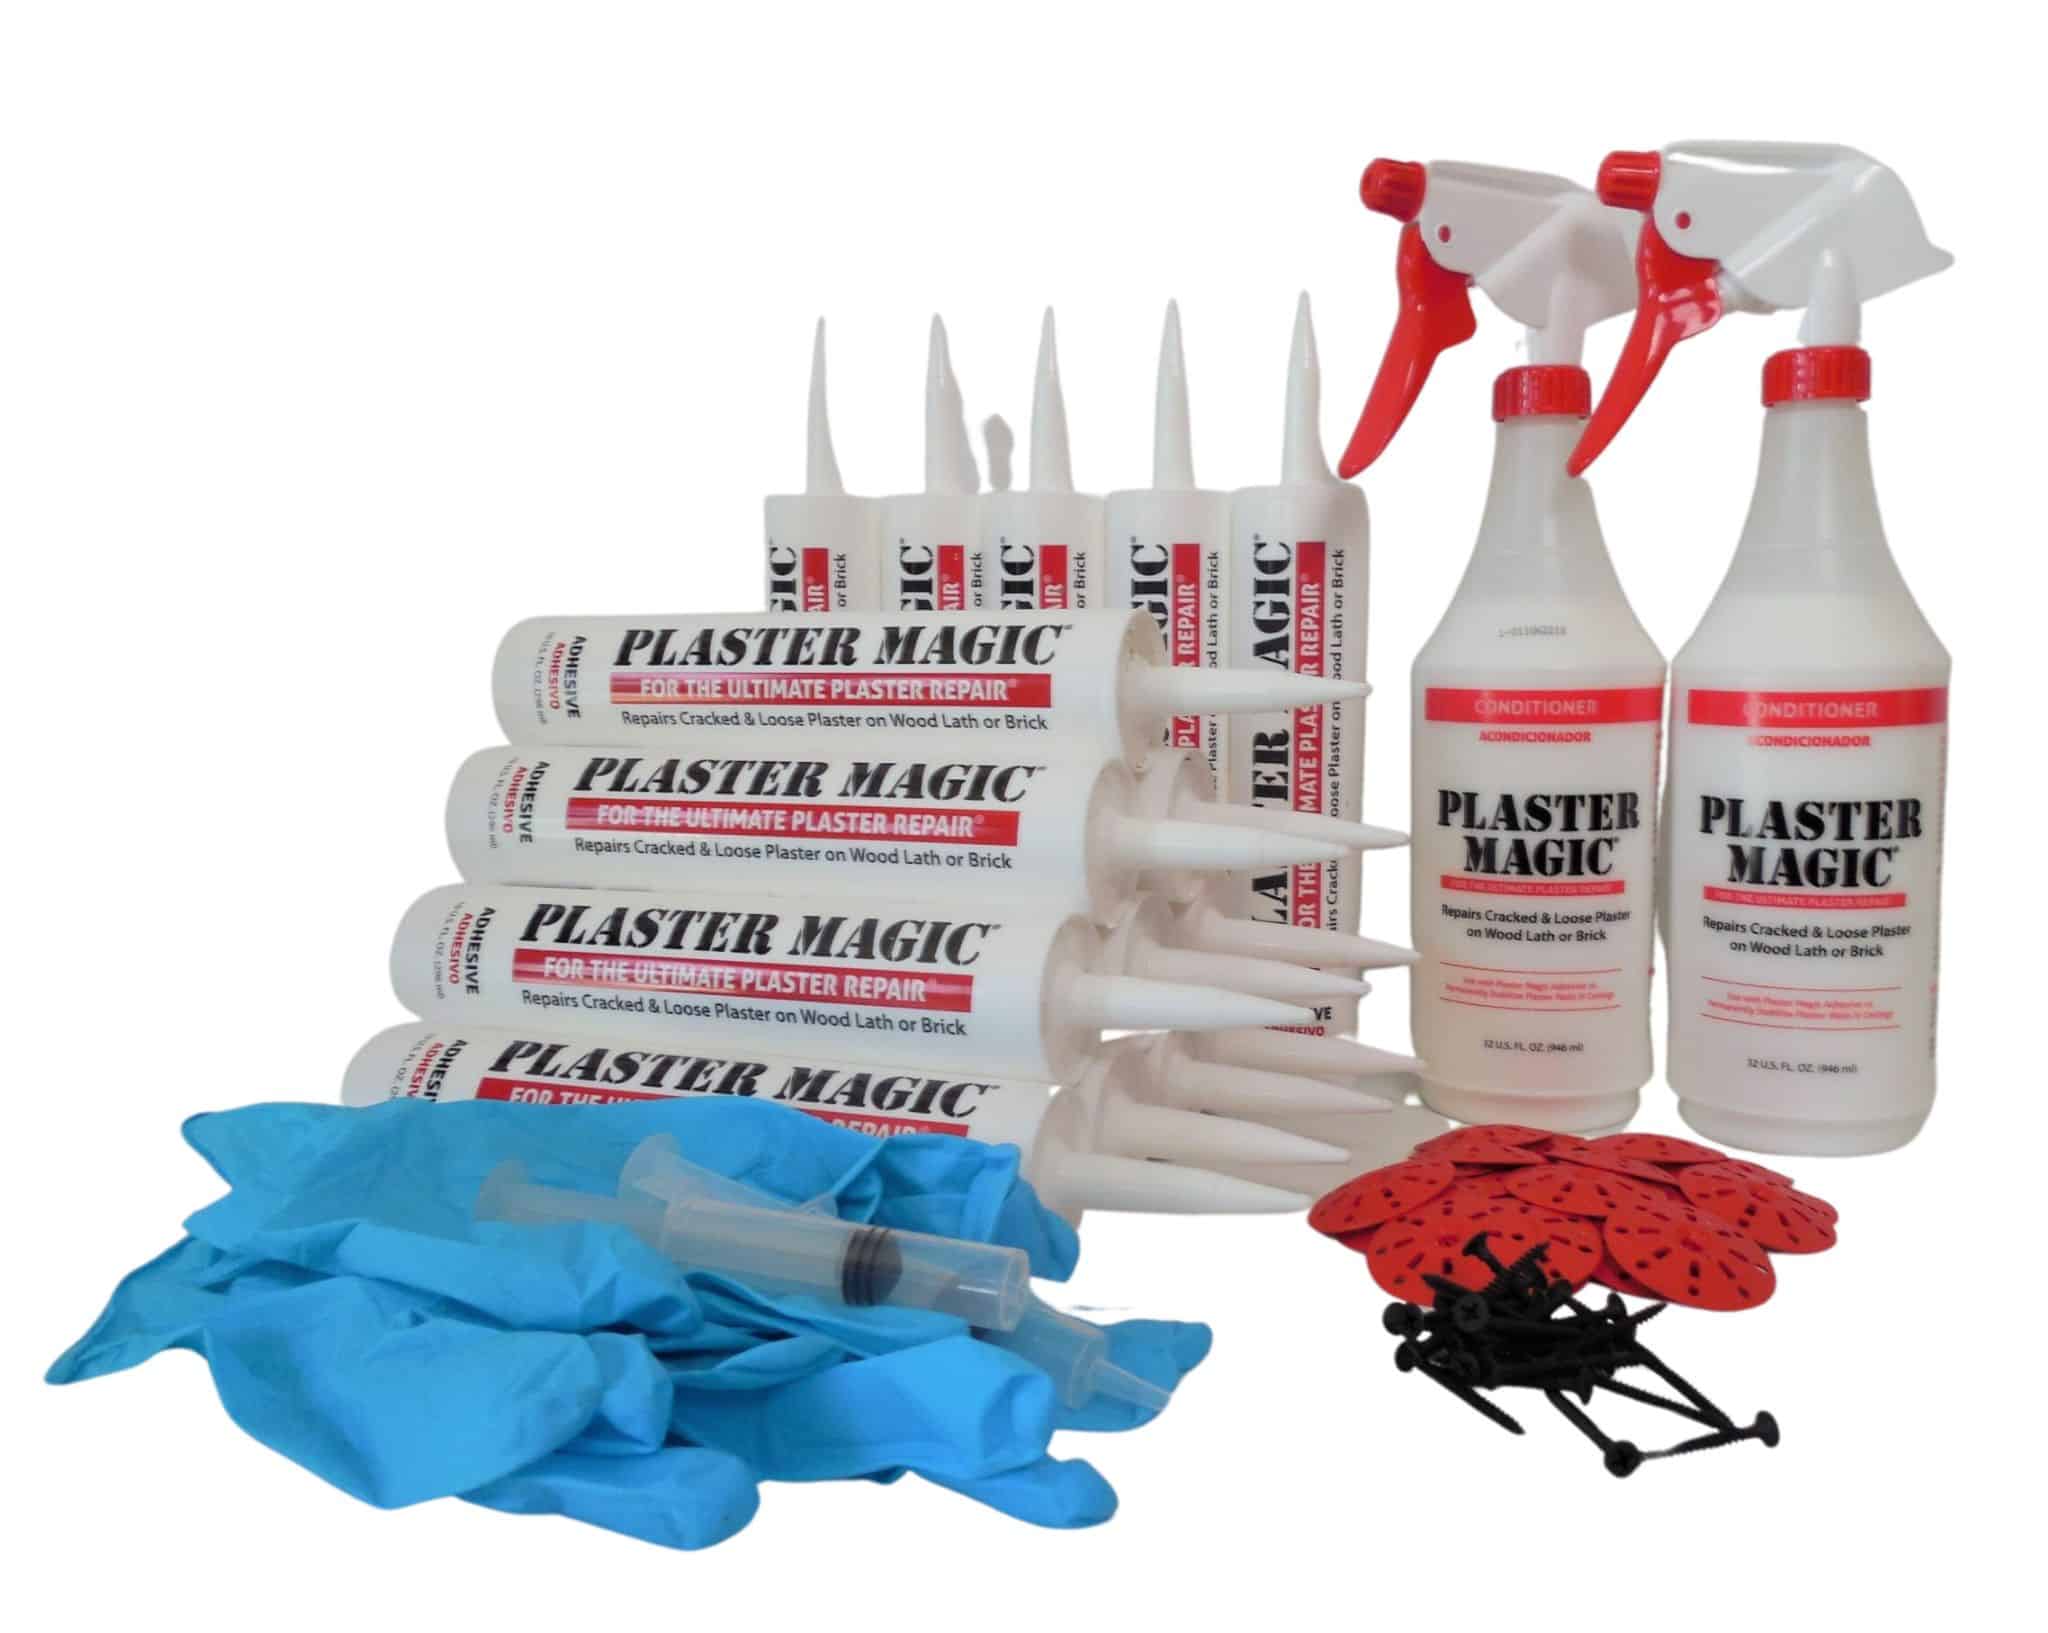 Plaster Magic-The Ultimate Plaster Repair - We receive many